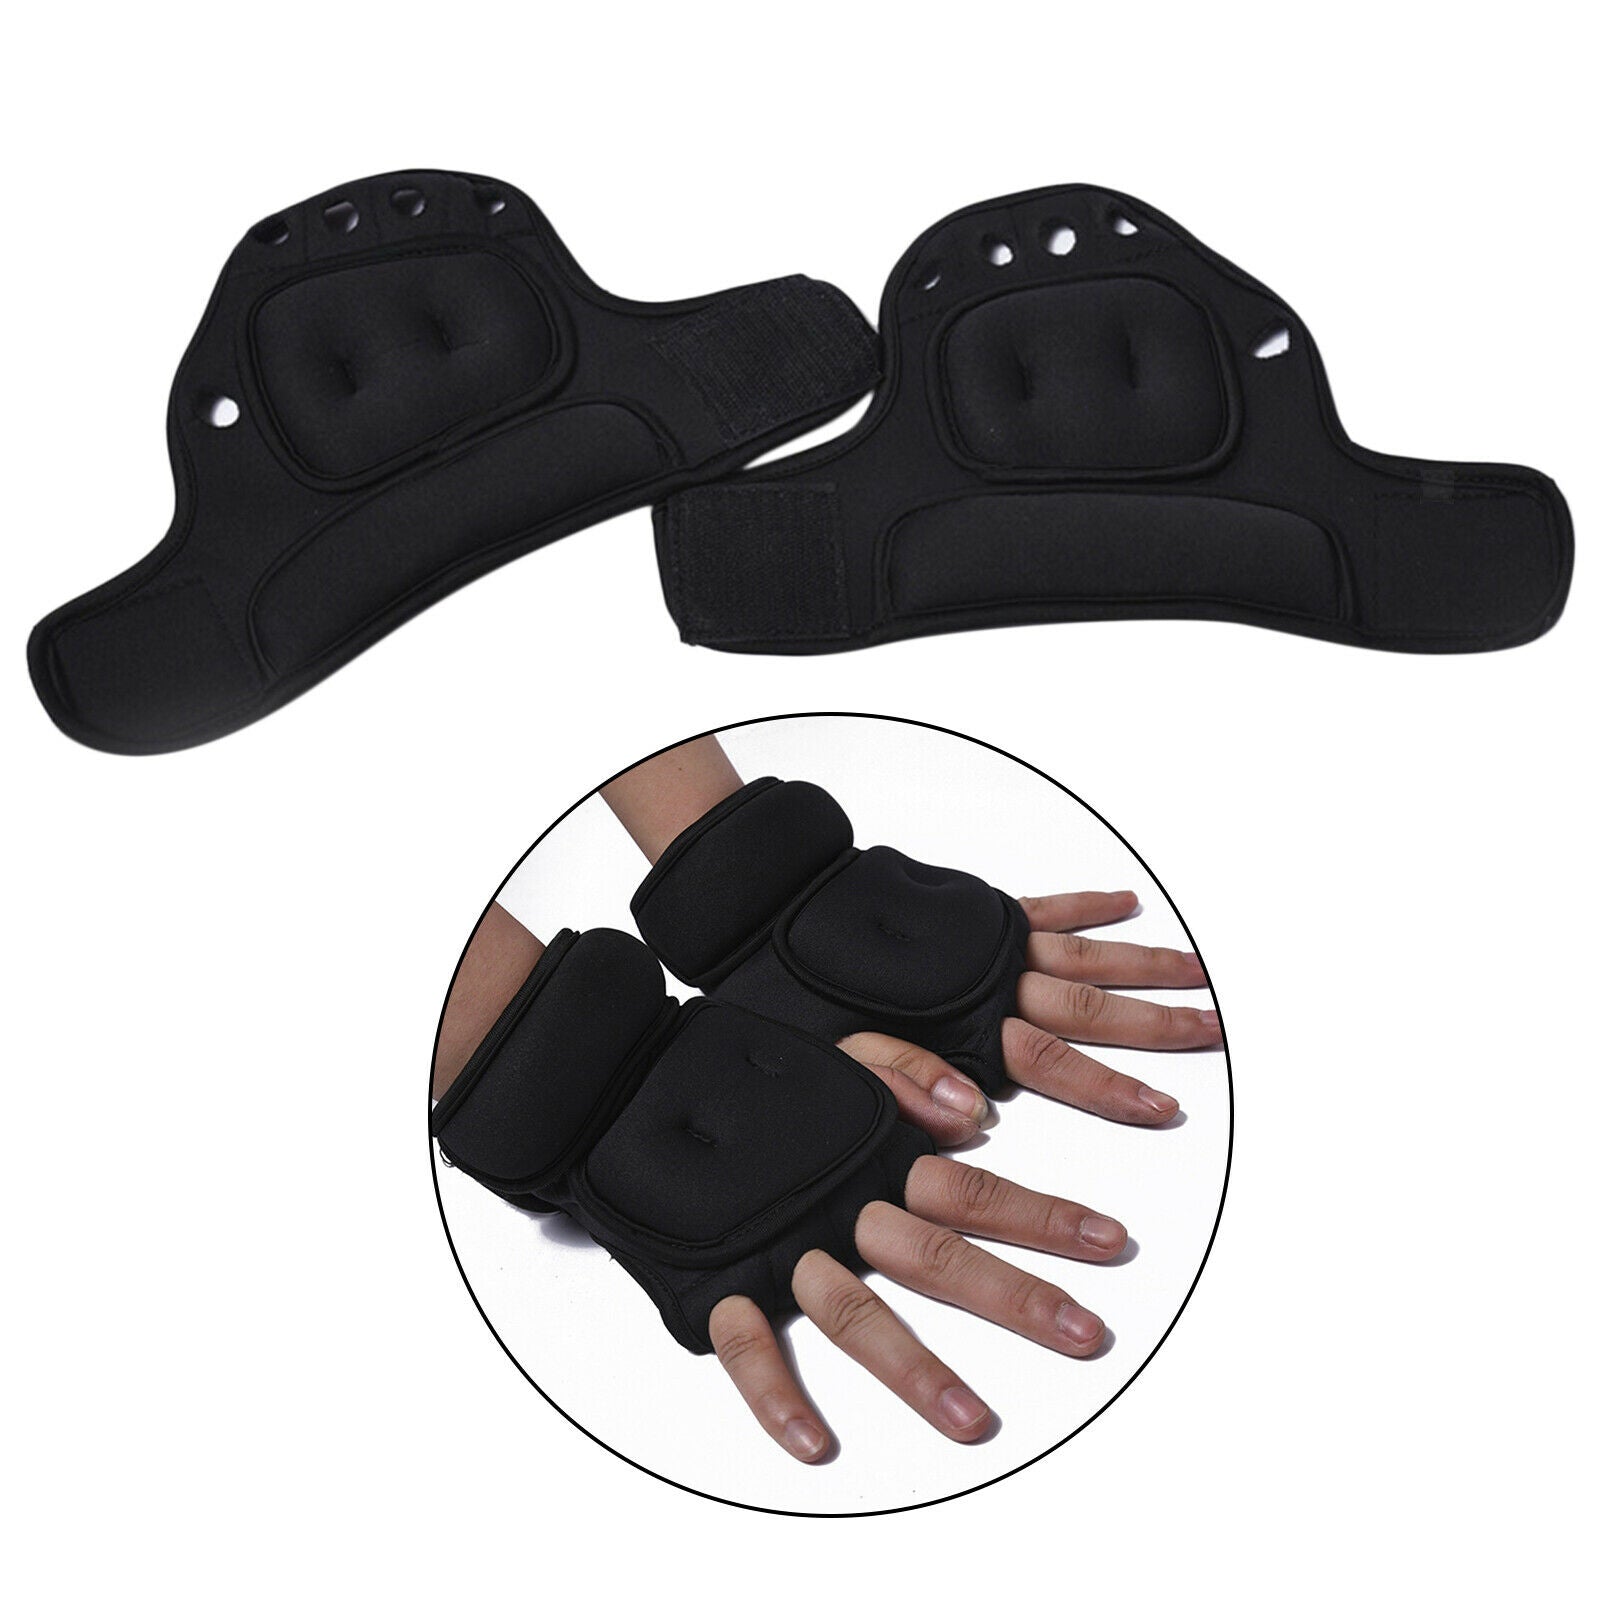 1kg Neoprene Weighted Gloves Sandbag Strength Training Wrist Support Black